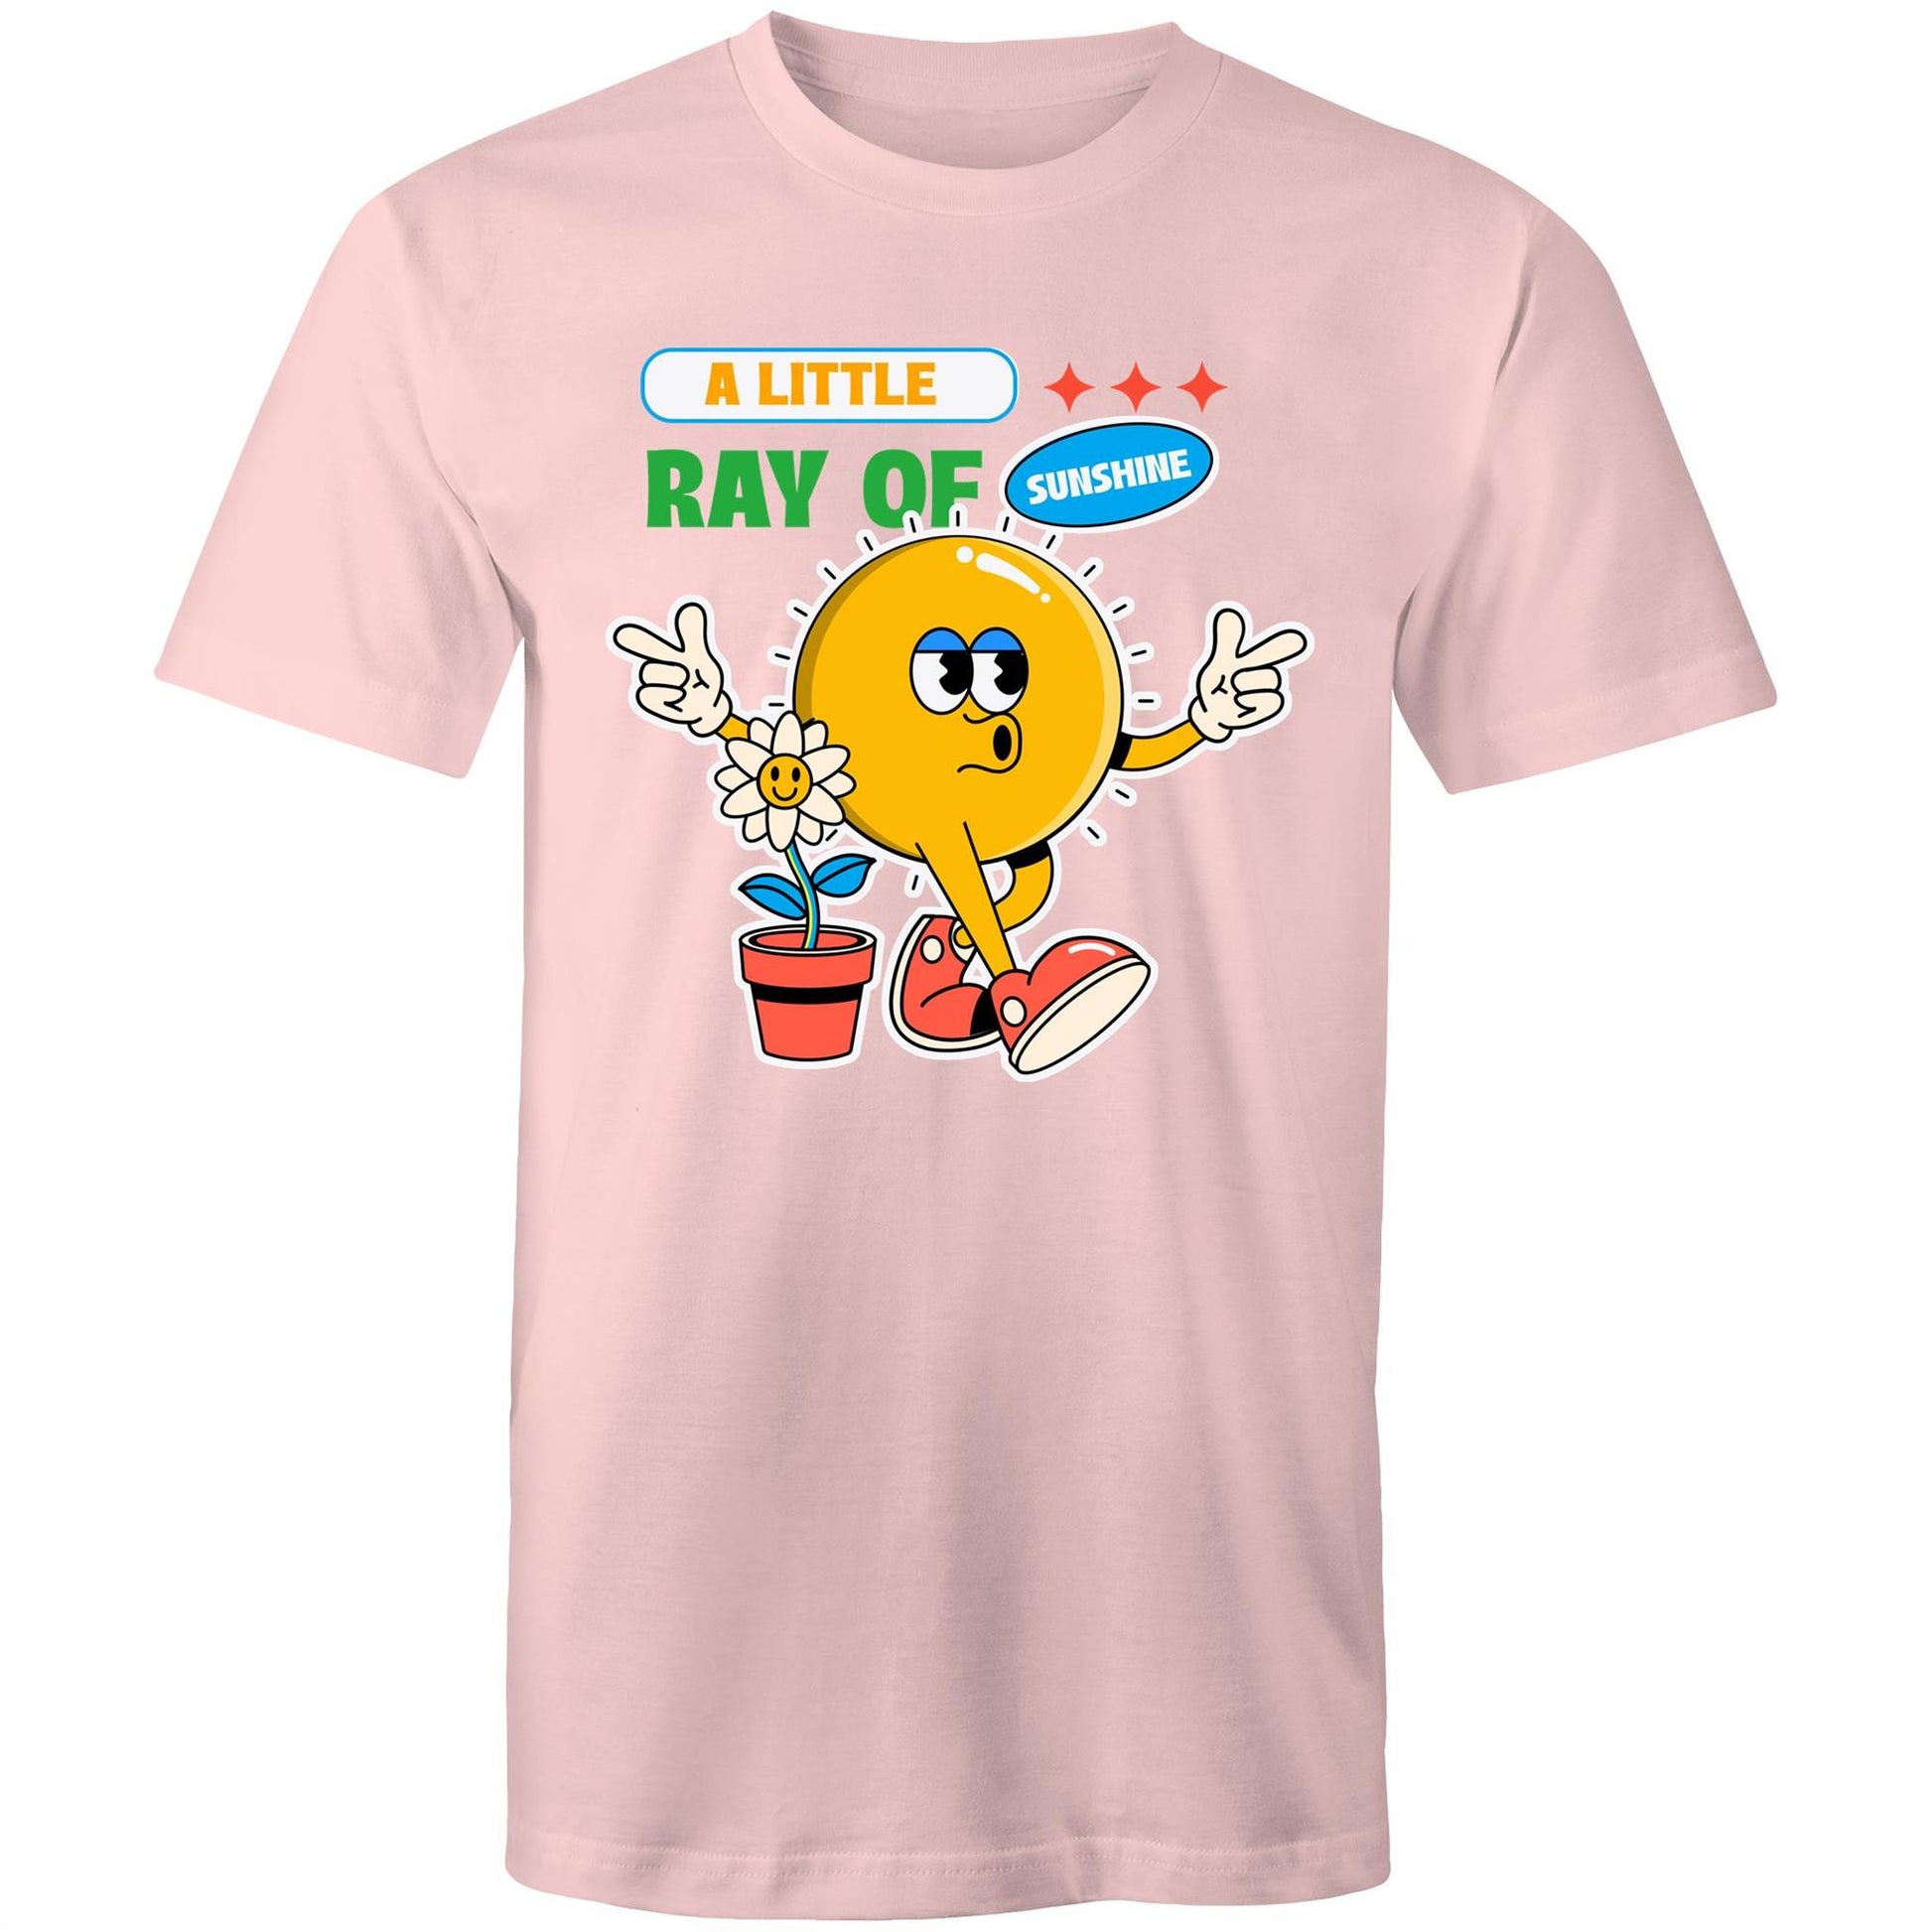 A Little Ray Of Sunshine - Mens T-Shirt Pink Mens T-shirt Retro Summer